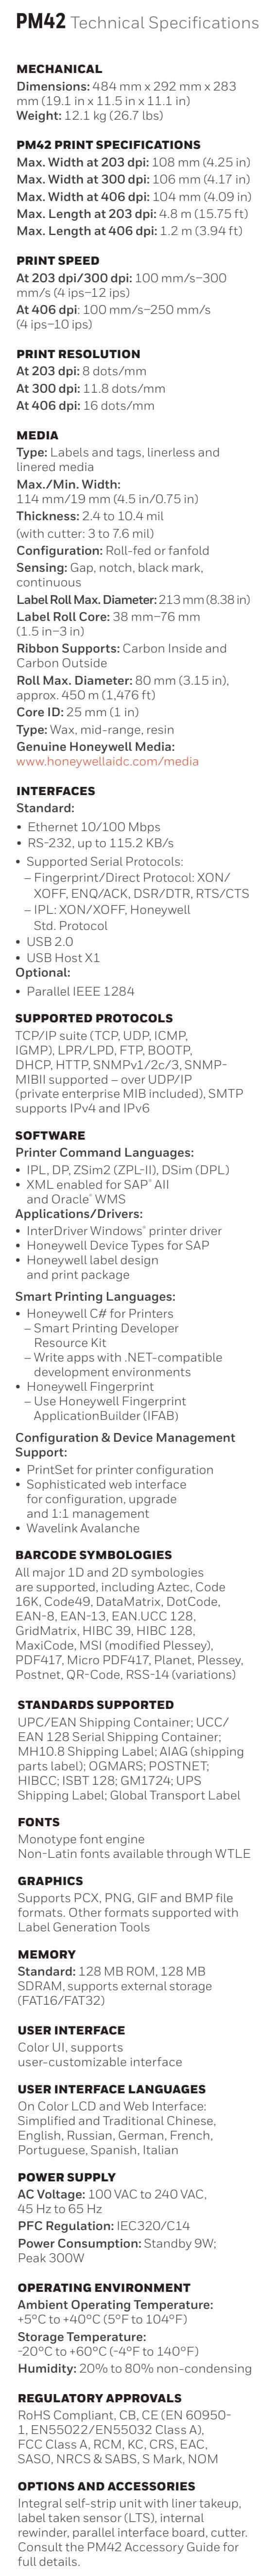 Ficha técnica de la impresora de etiquetas industrial Honeywell PM42